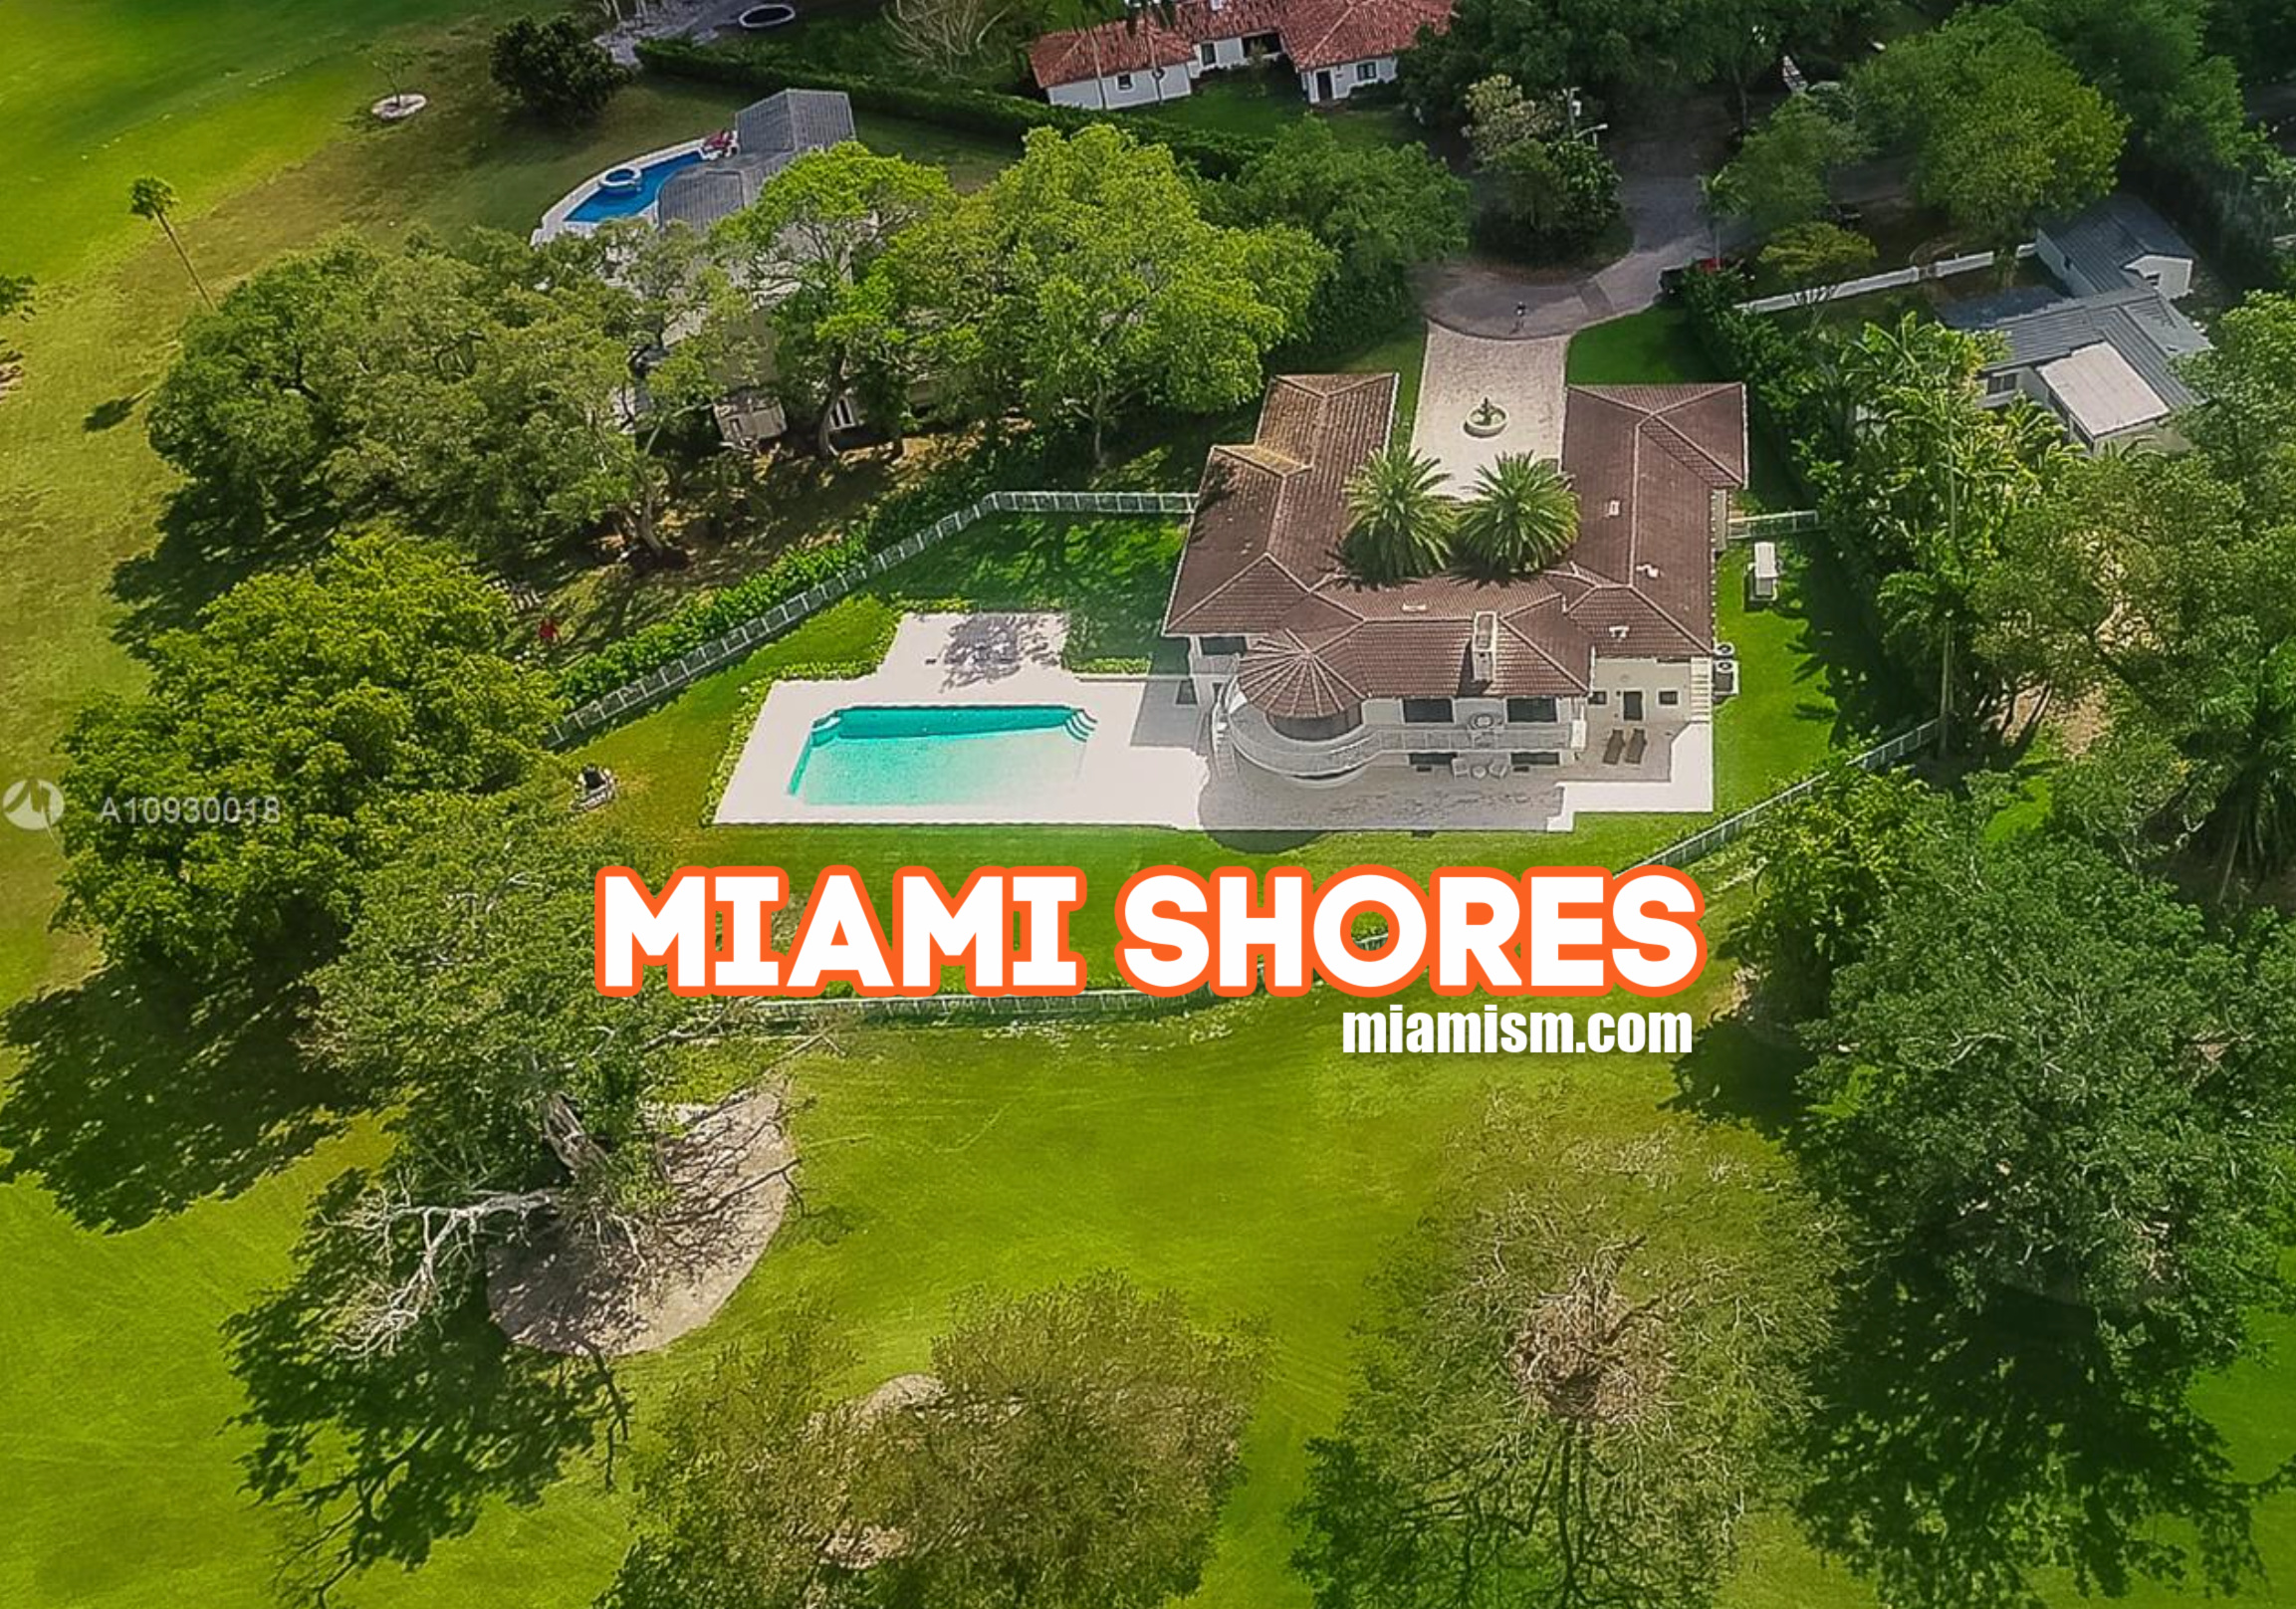 miami-shores-real-estate-market-report-september-2020